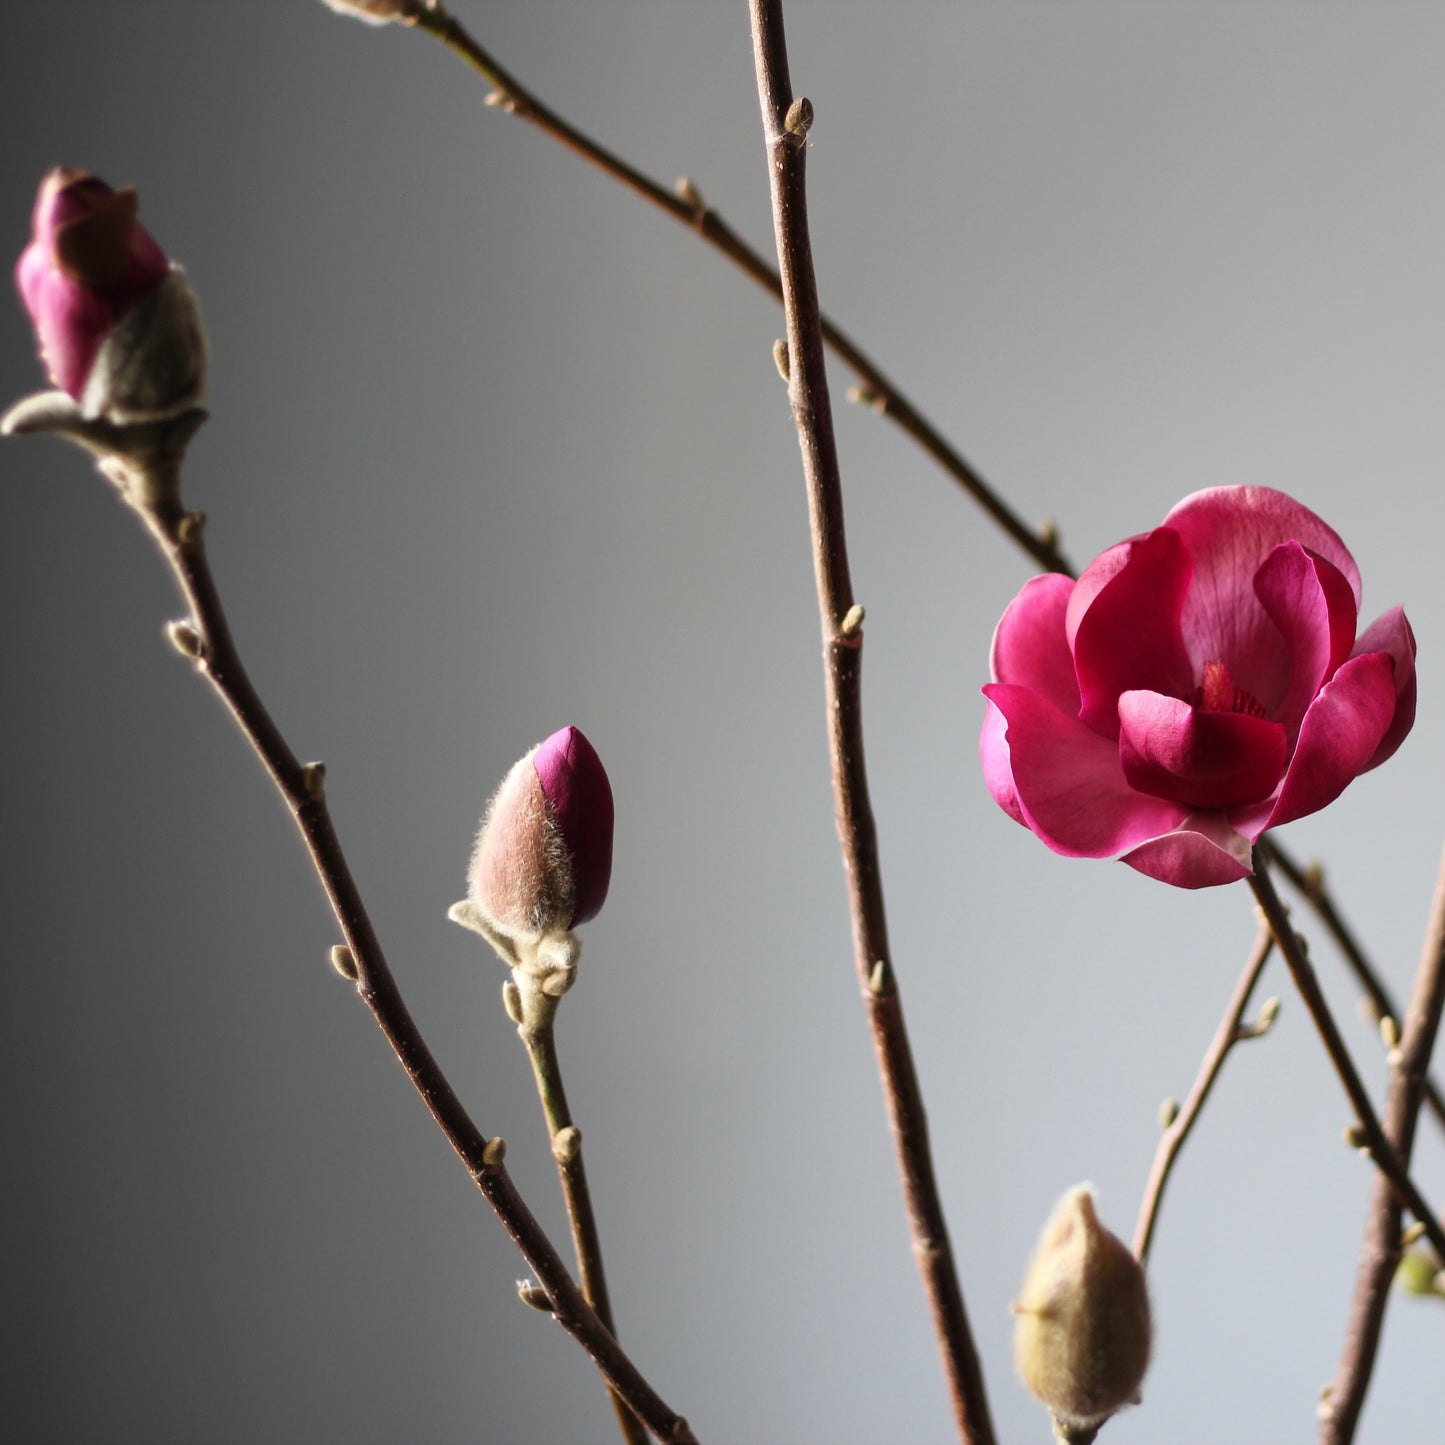 Rami di magnolia